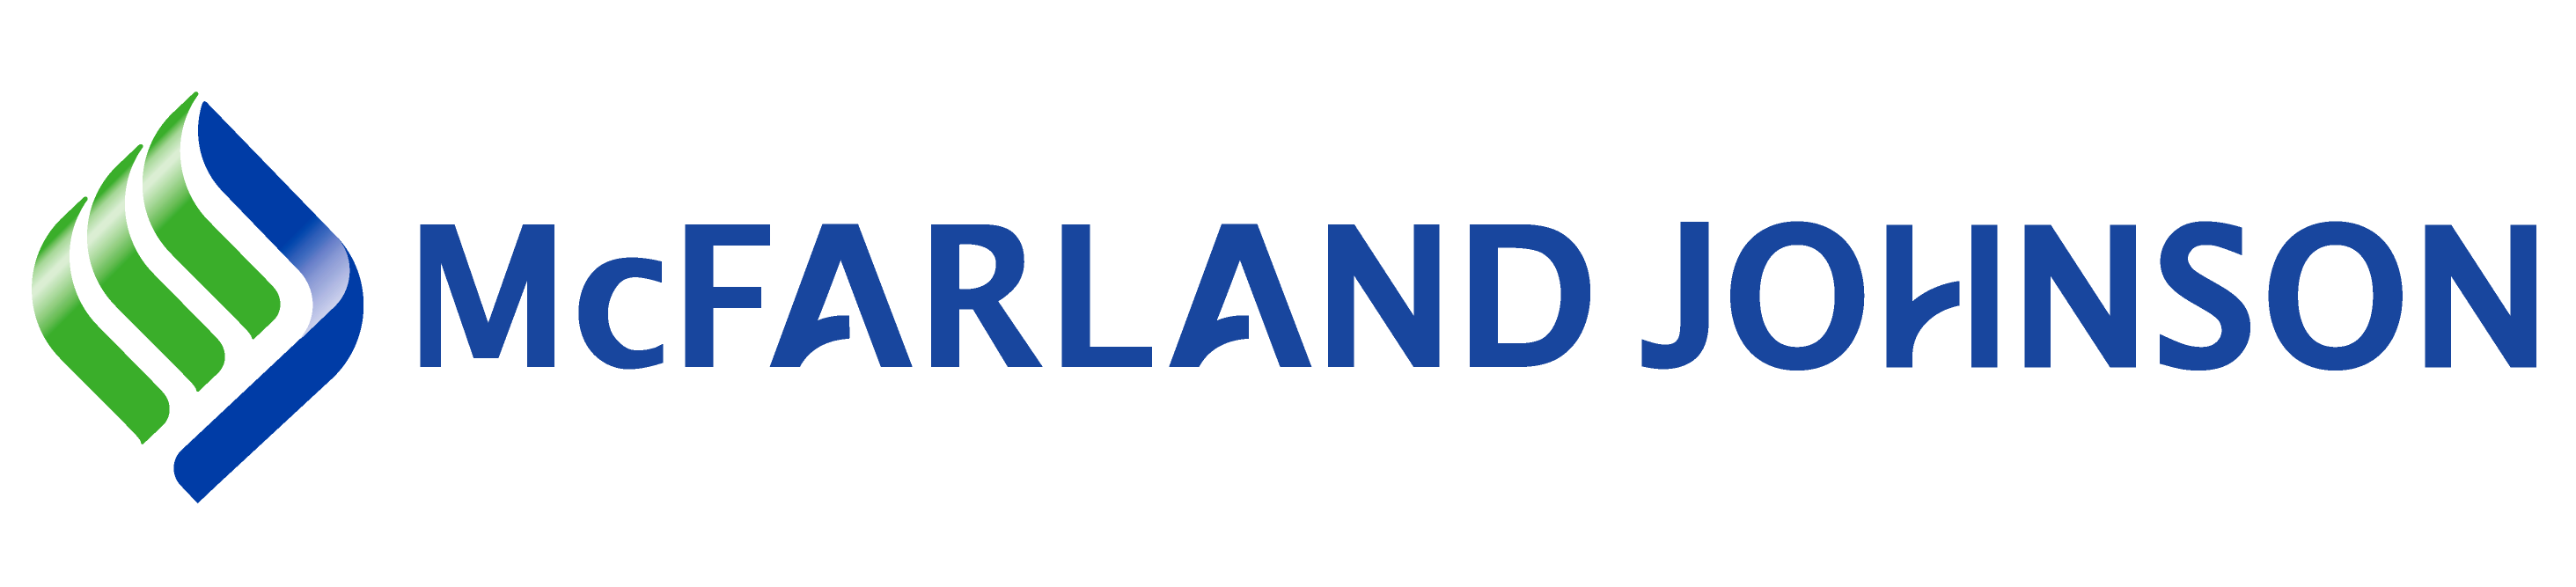 McFarland Johnson Logo Horizontal Design-1